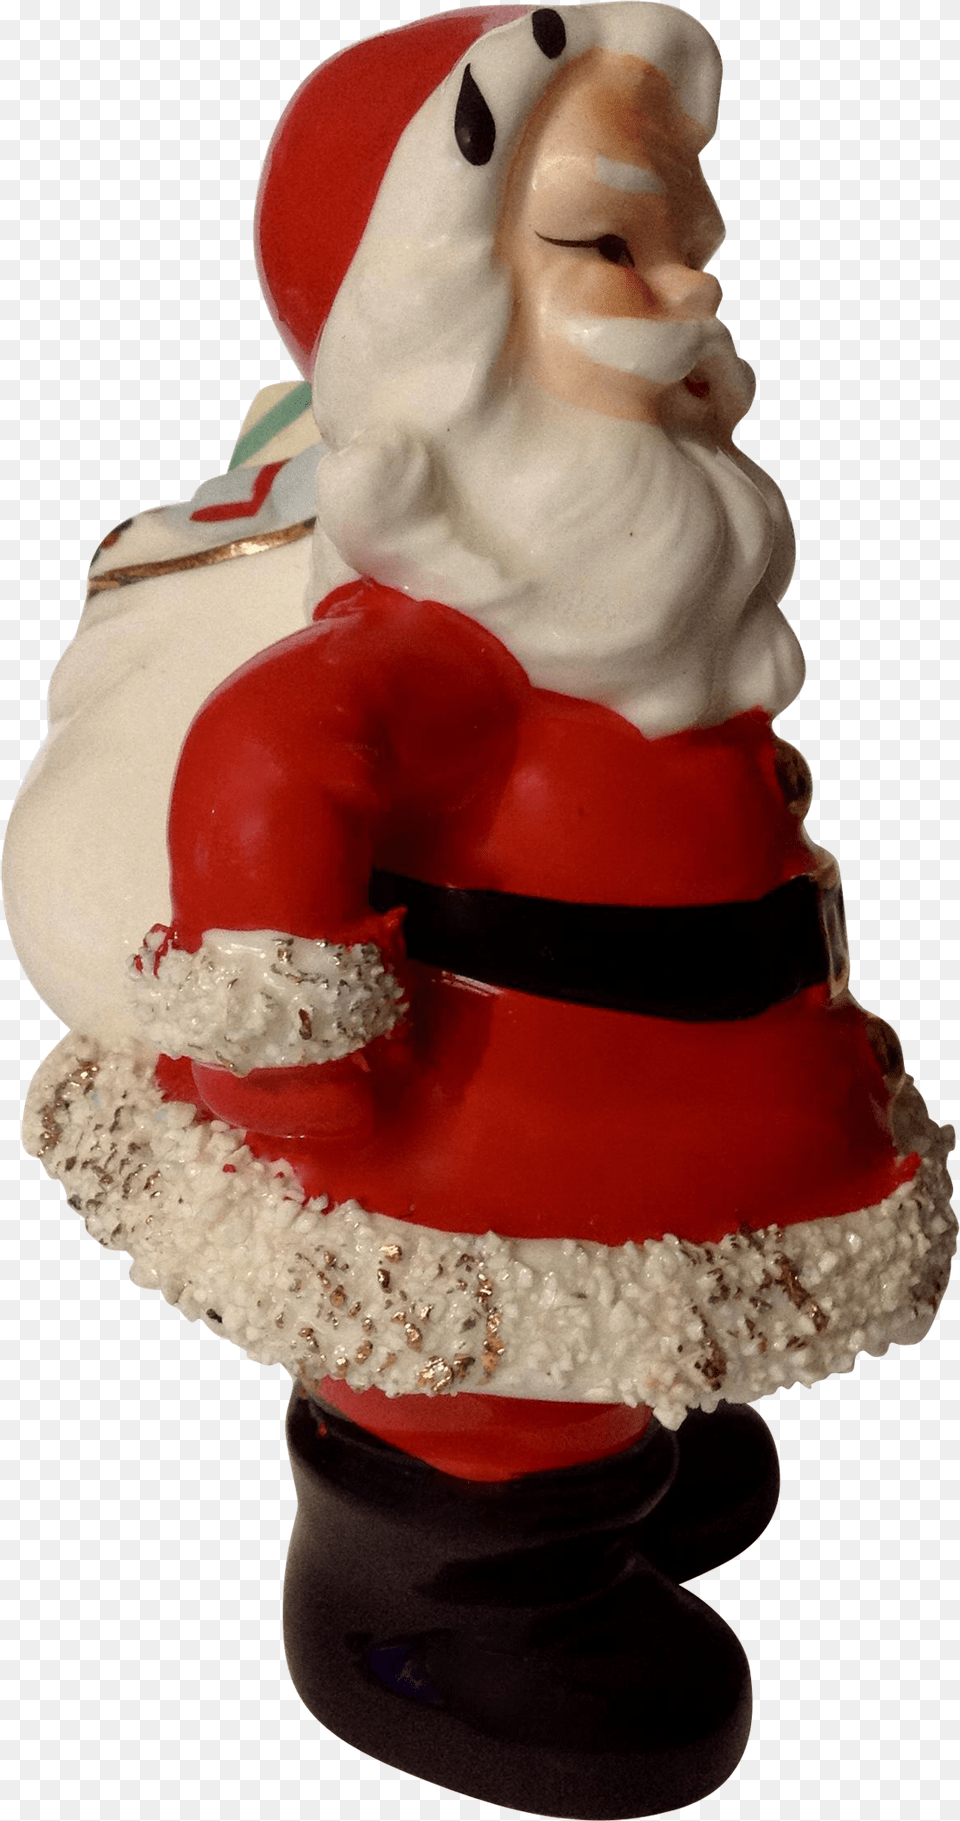 Vintage Santa Claus Ceramic Figurine With Bag Of Toys Figurine, Cake, Dessert, Food, Baby Png